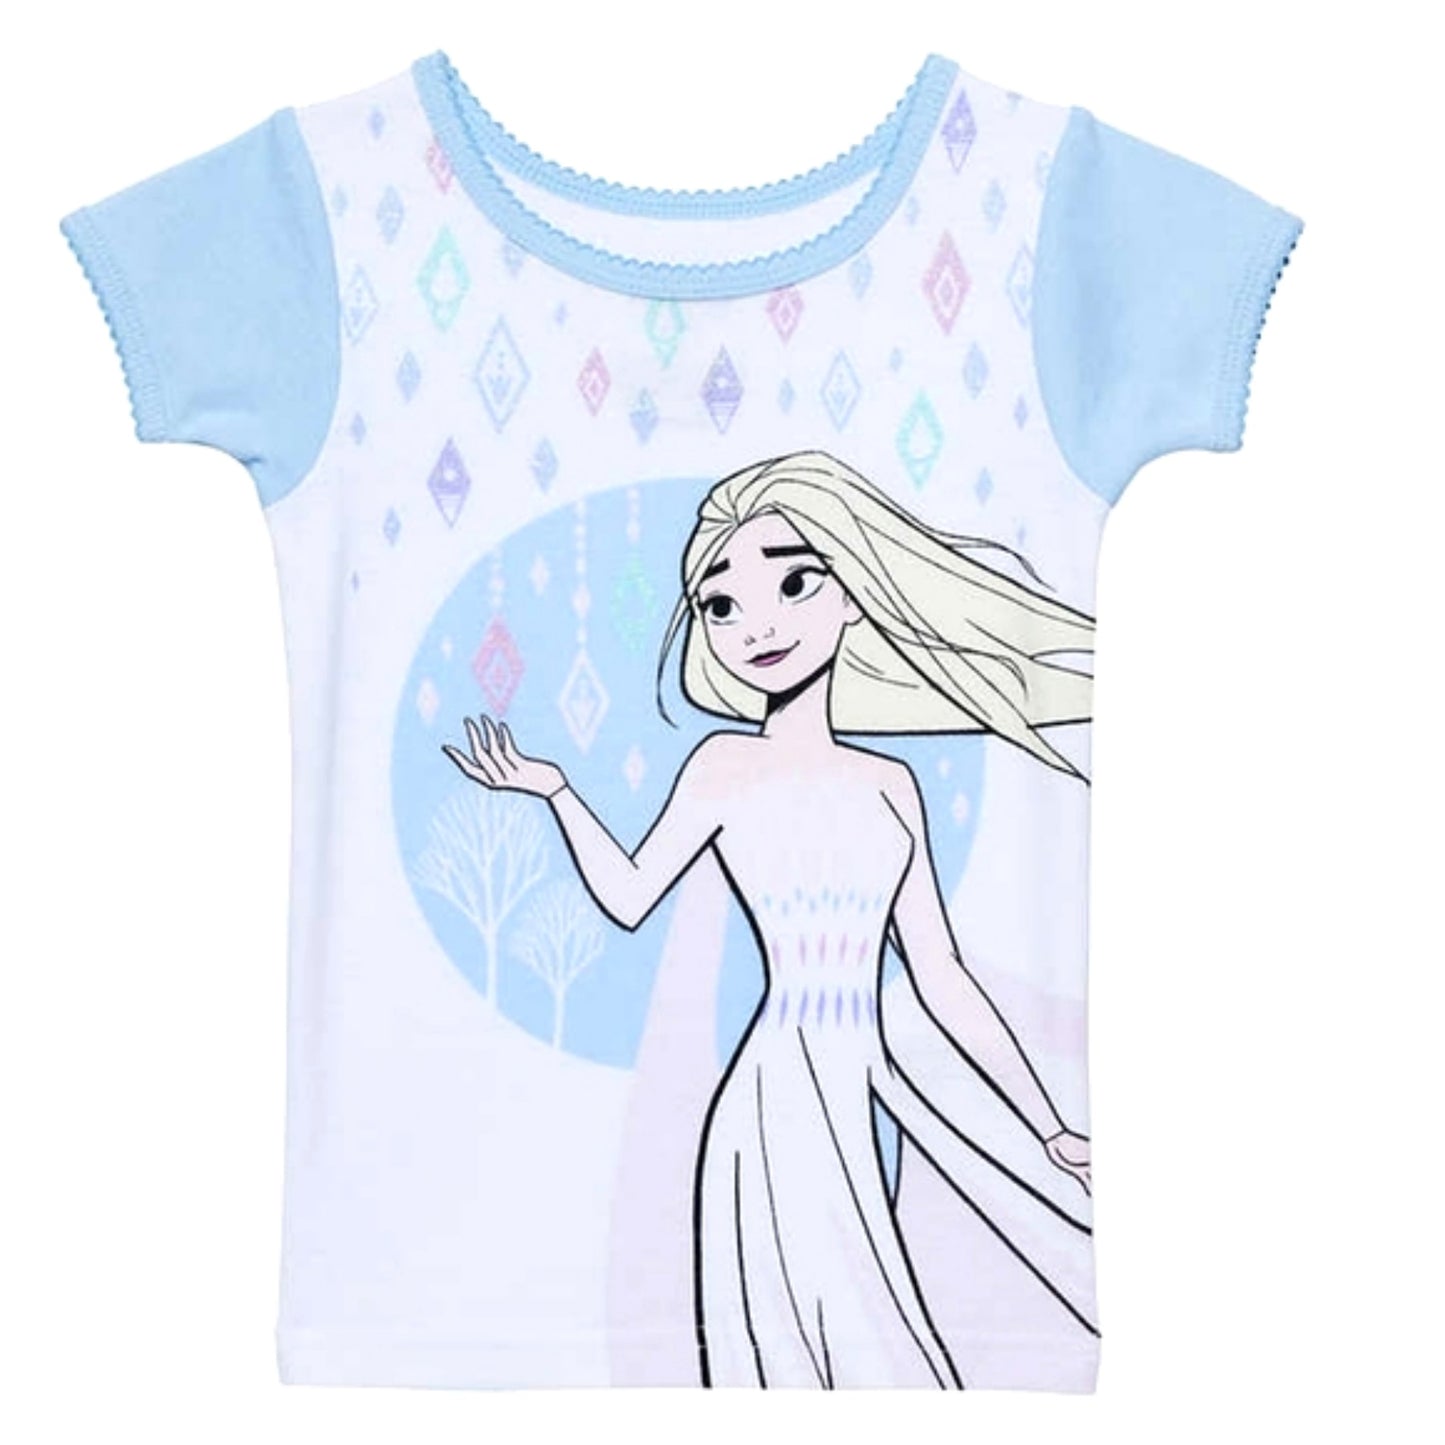 DISNEY Frozen II Anna & Elsa 4-Piece Cotton Pajama Set